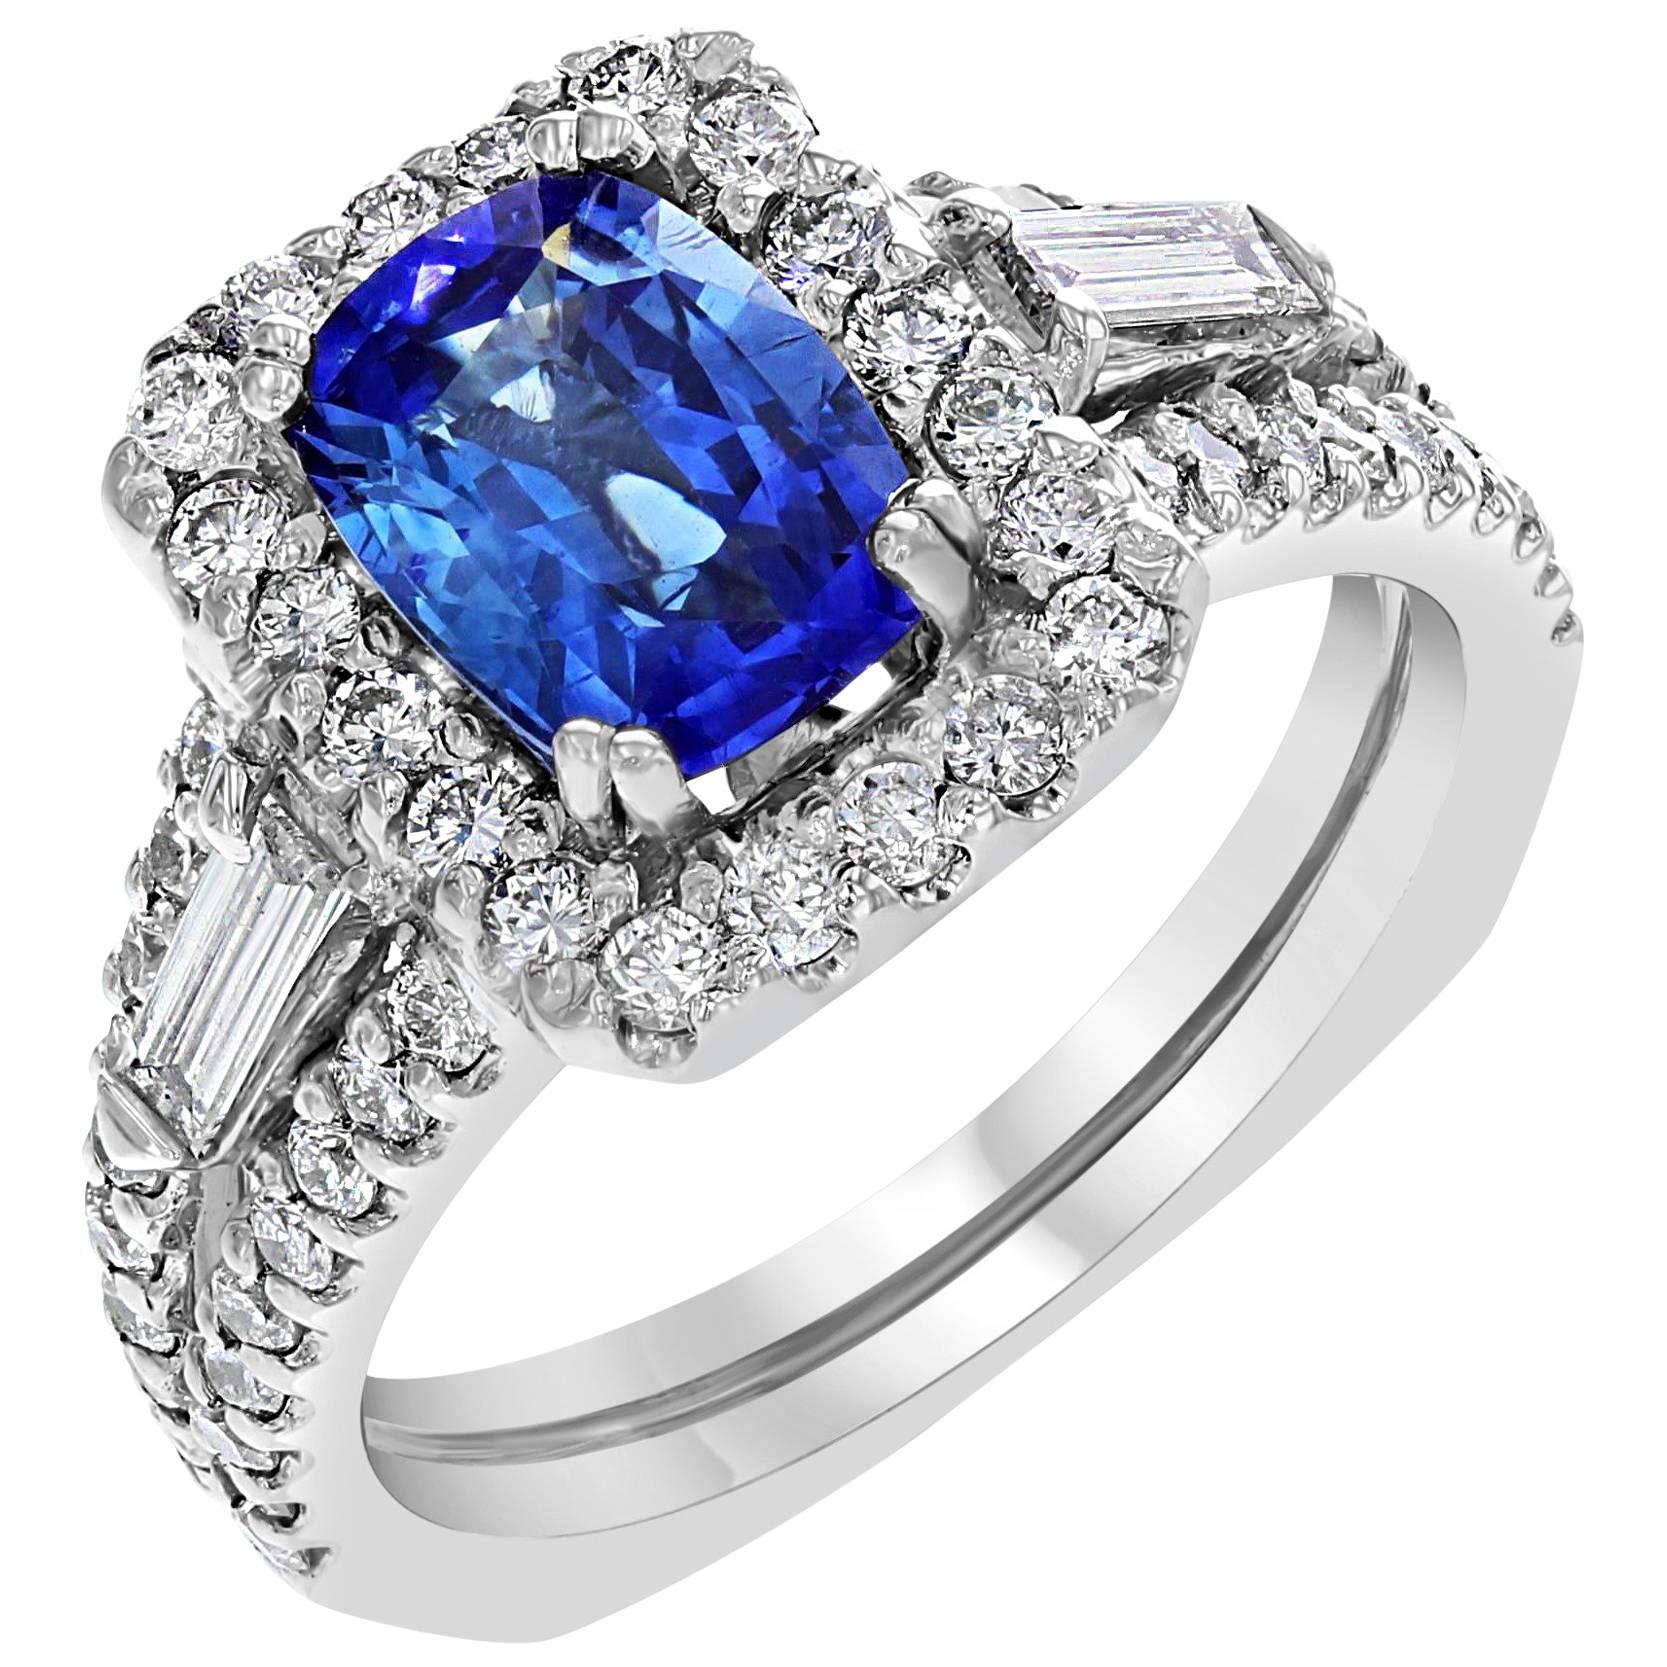 GIA Certified 2.59 Carat Blue Sapphire Diamond Cocktail Ring